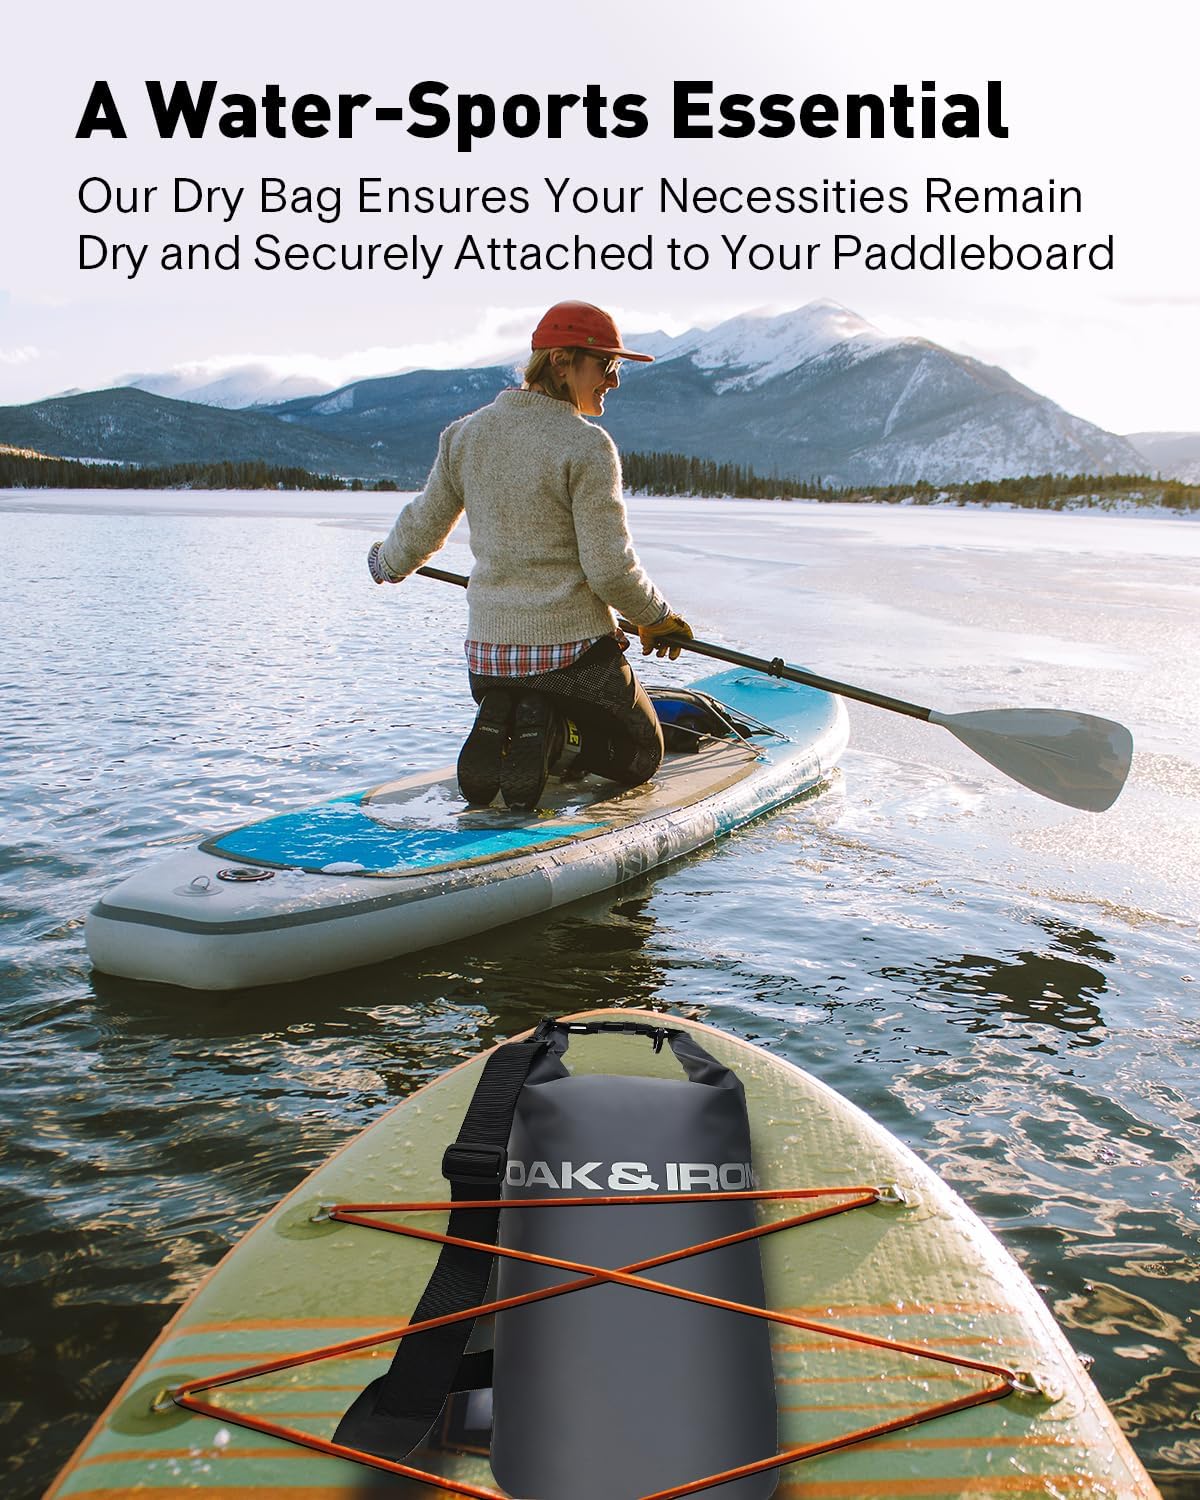 OAK & IRON Waterproof Drg Bag for WAVE/WAVE Pro Outdoor Pump